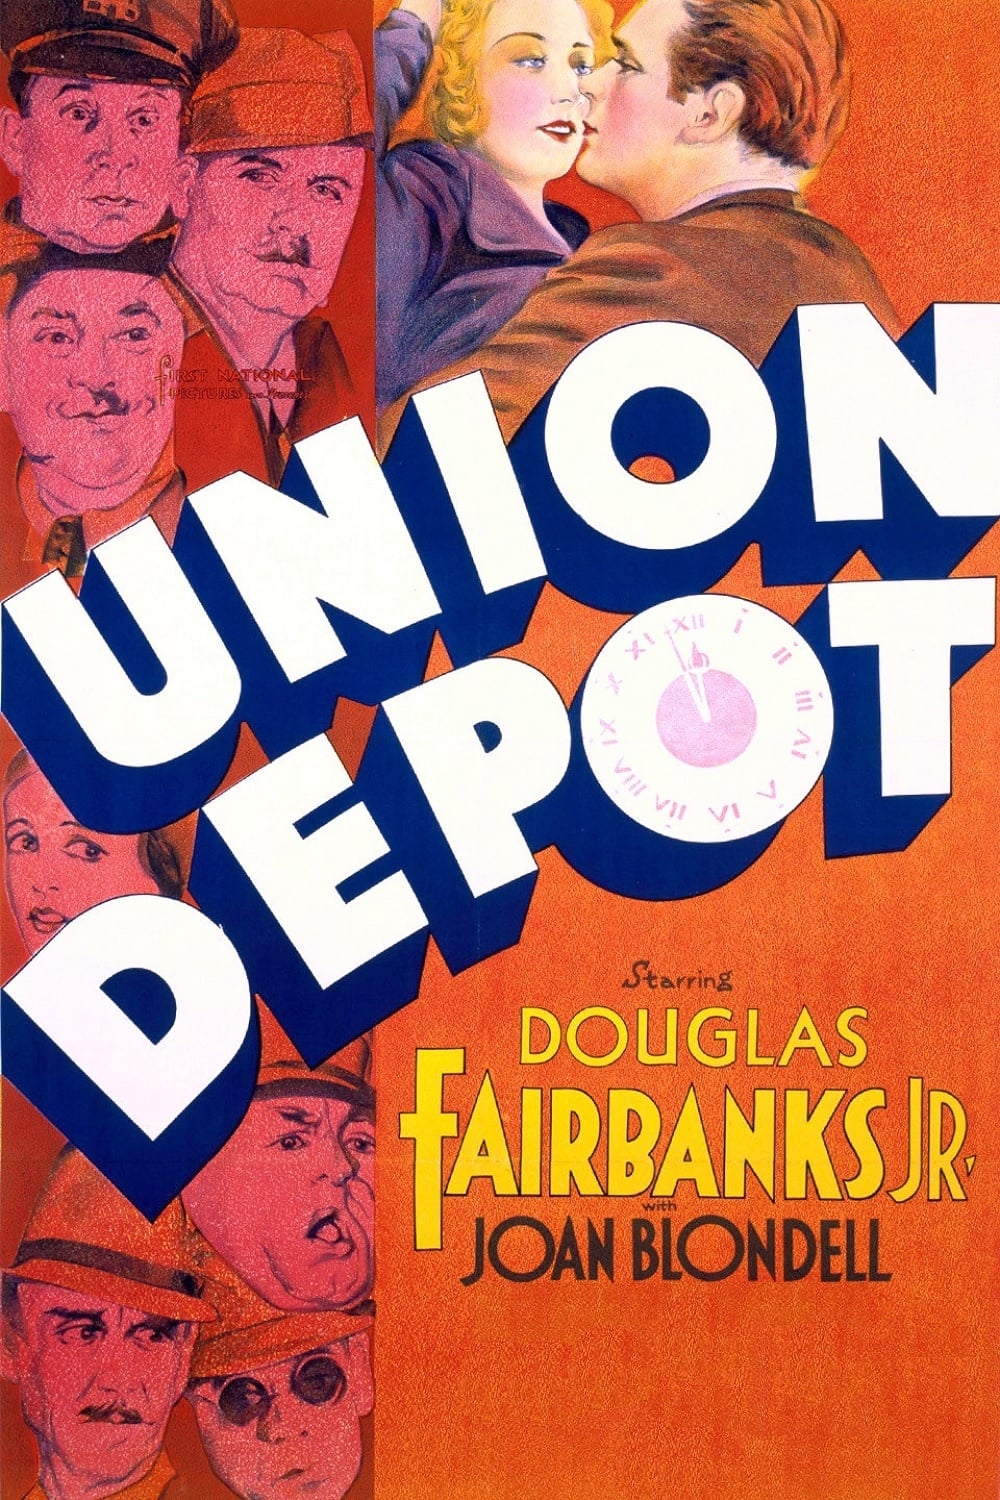 Union Depot (1932)